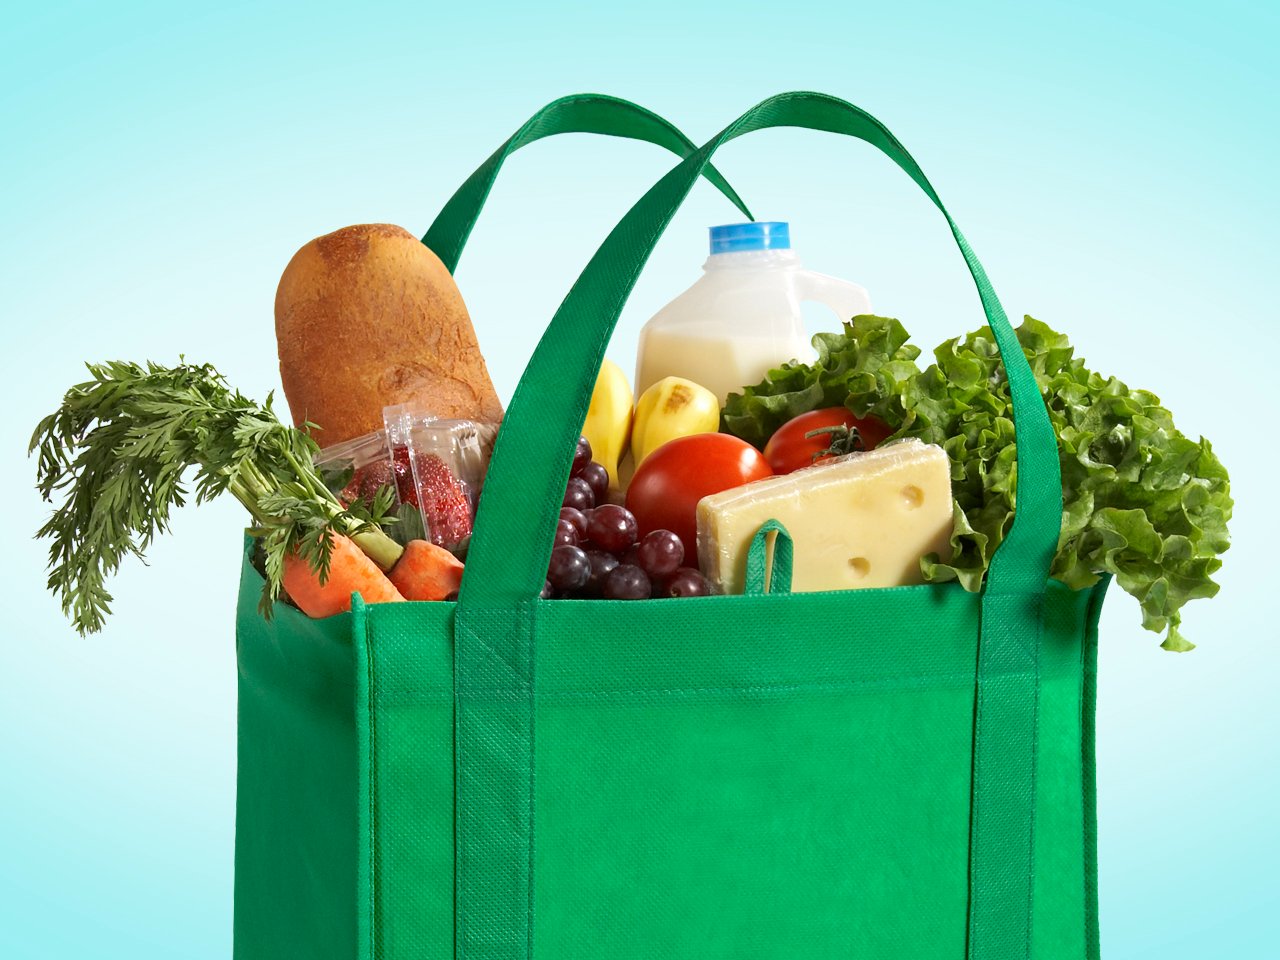 Green bag of groceries.